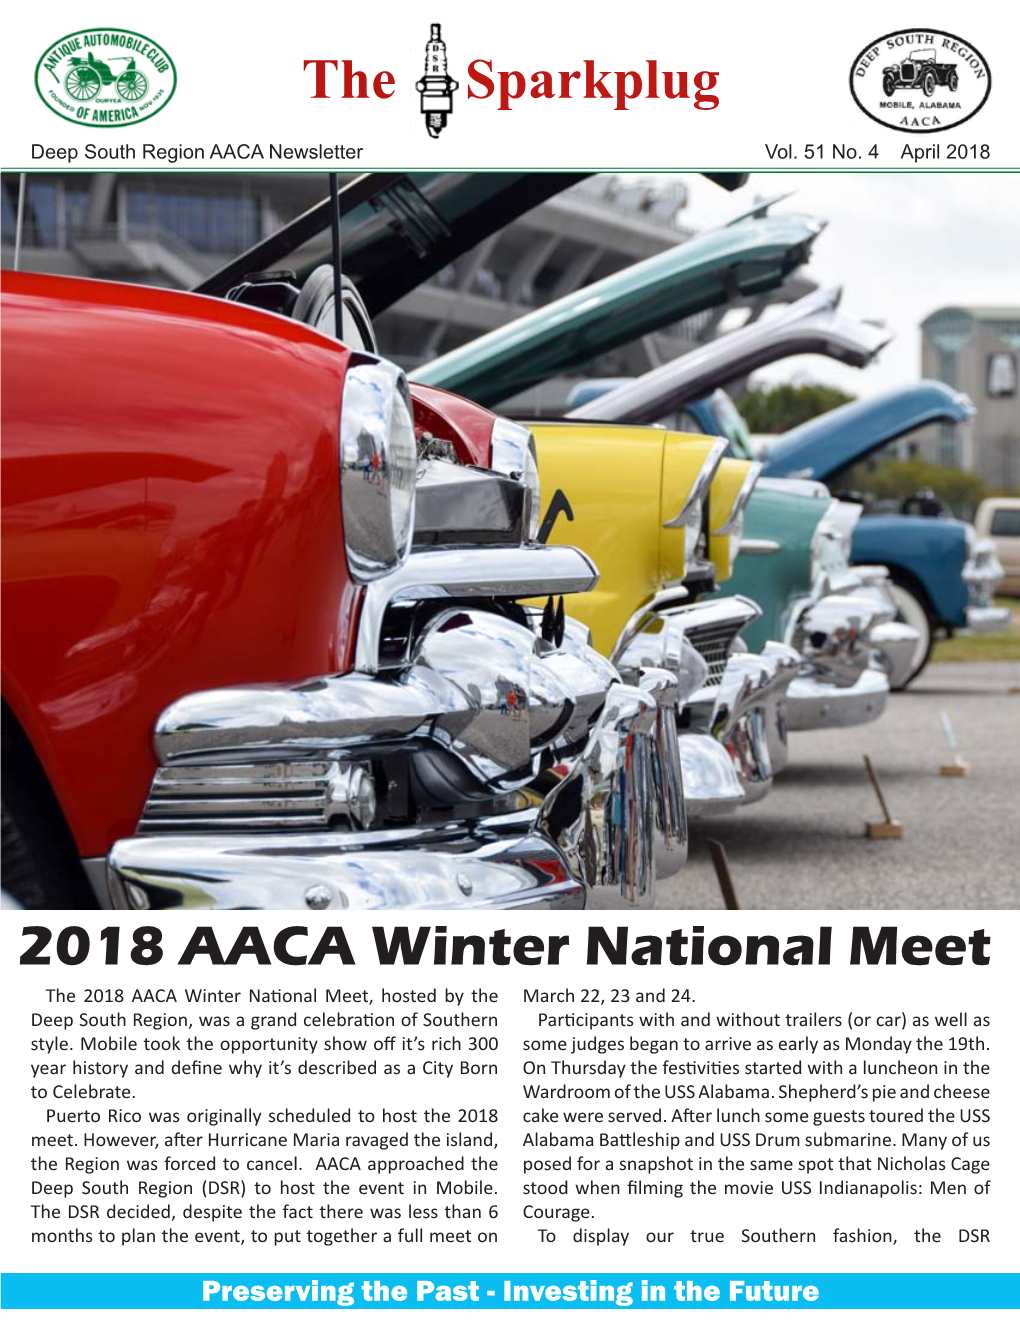 The Sparkplug 2018 AACA Winter National Meet